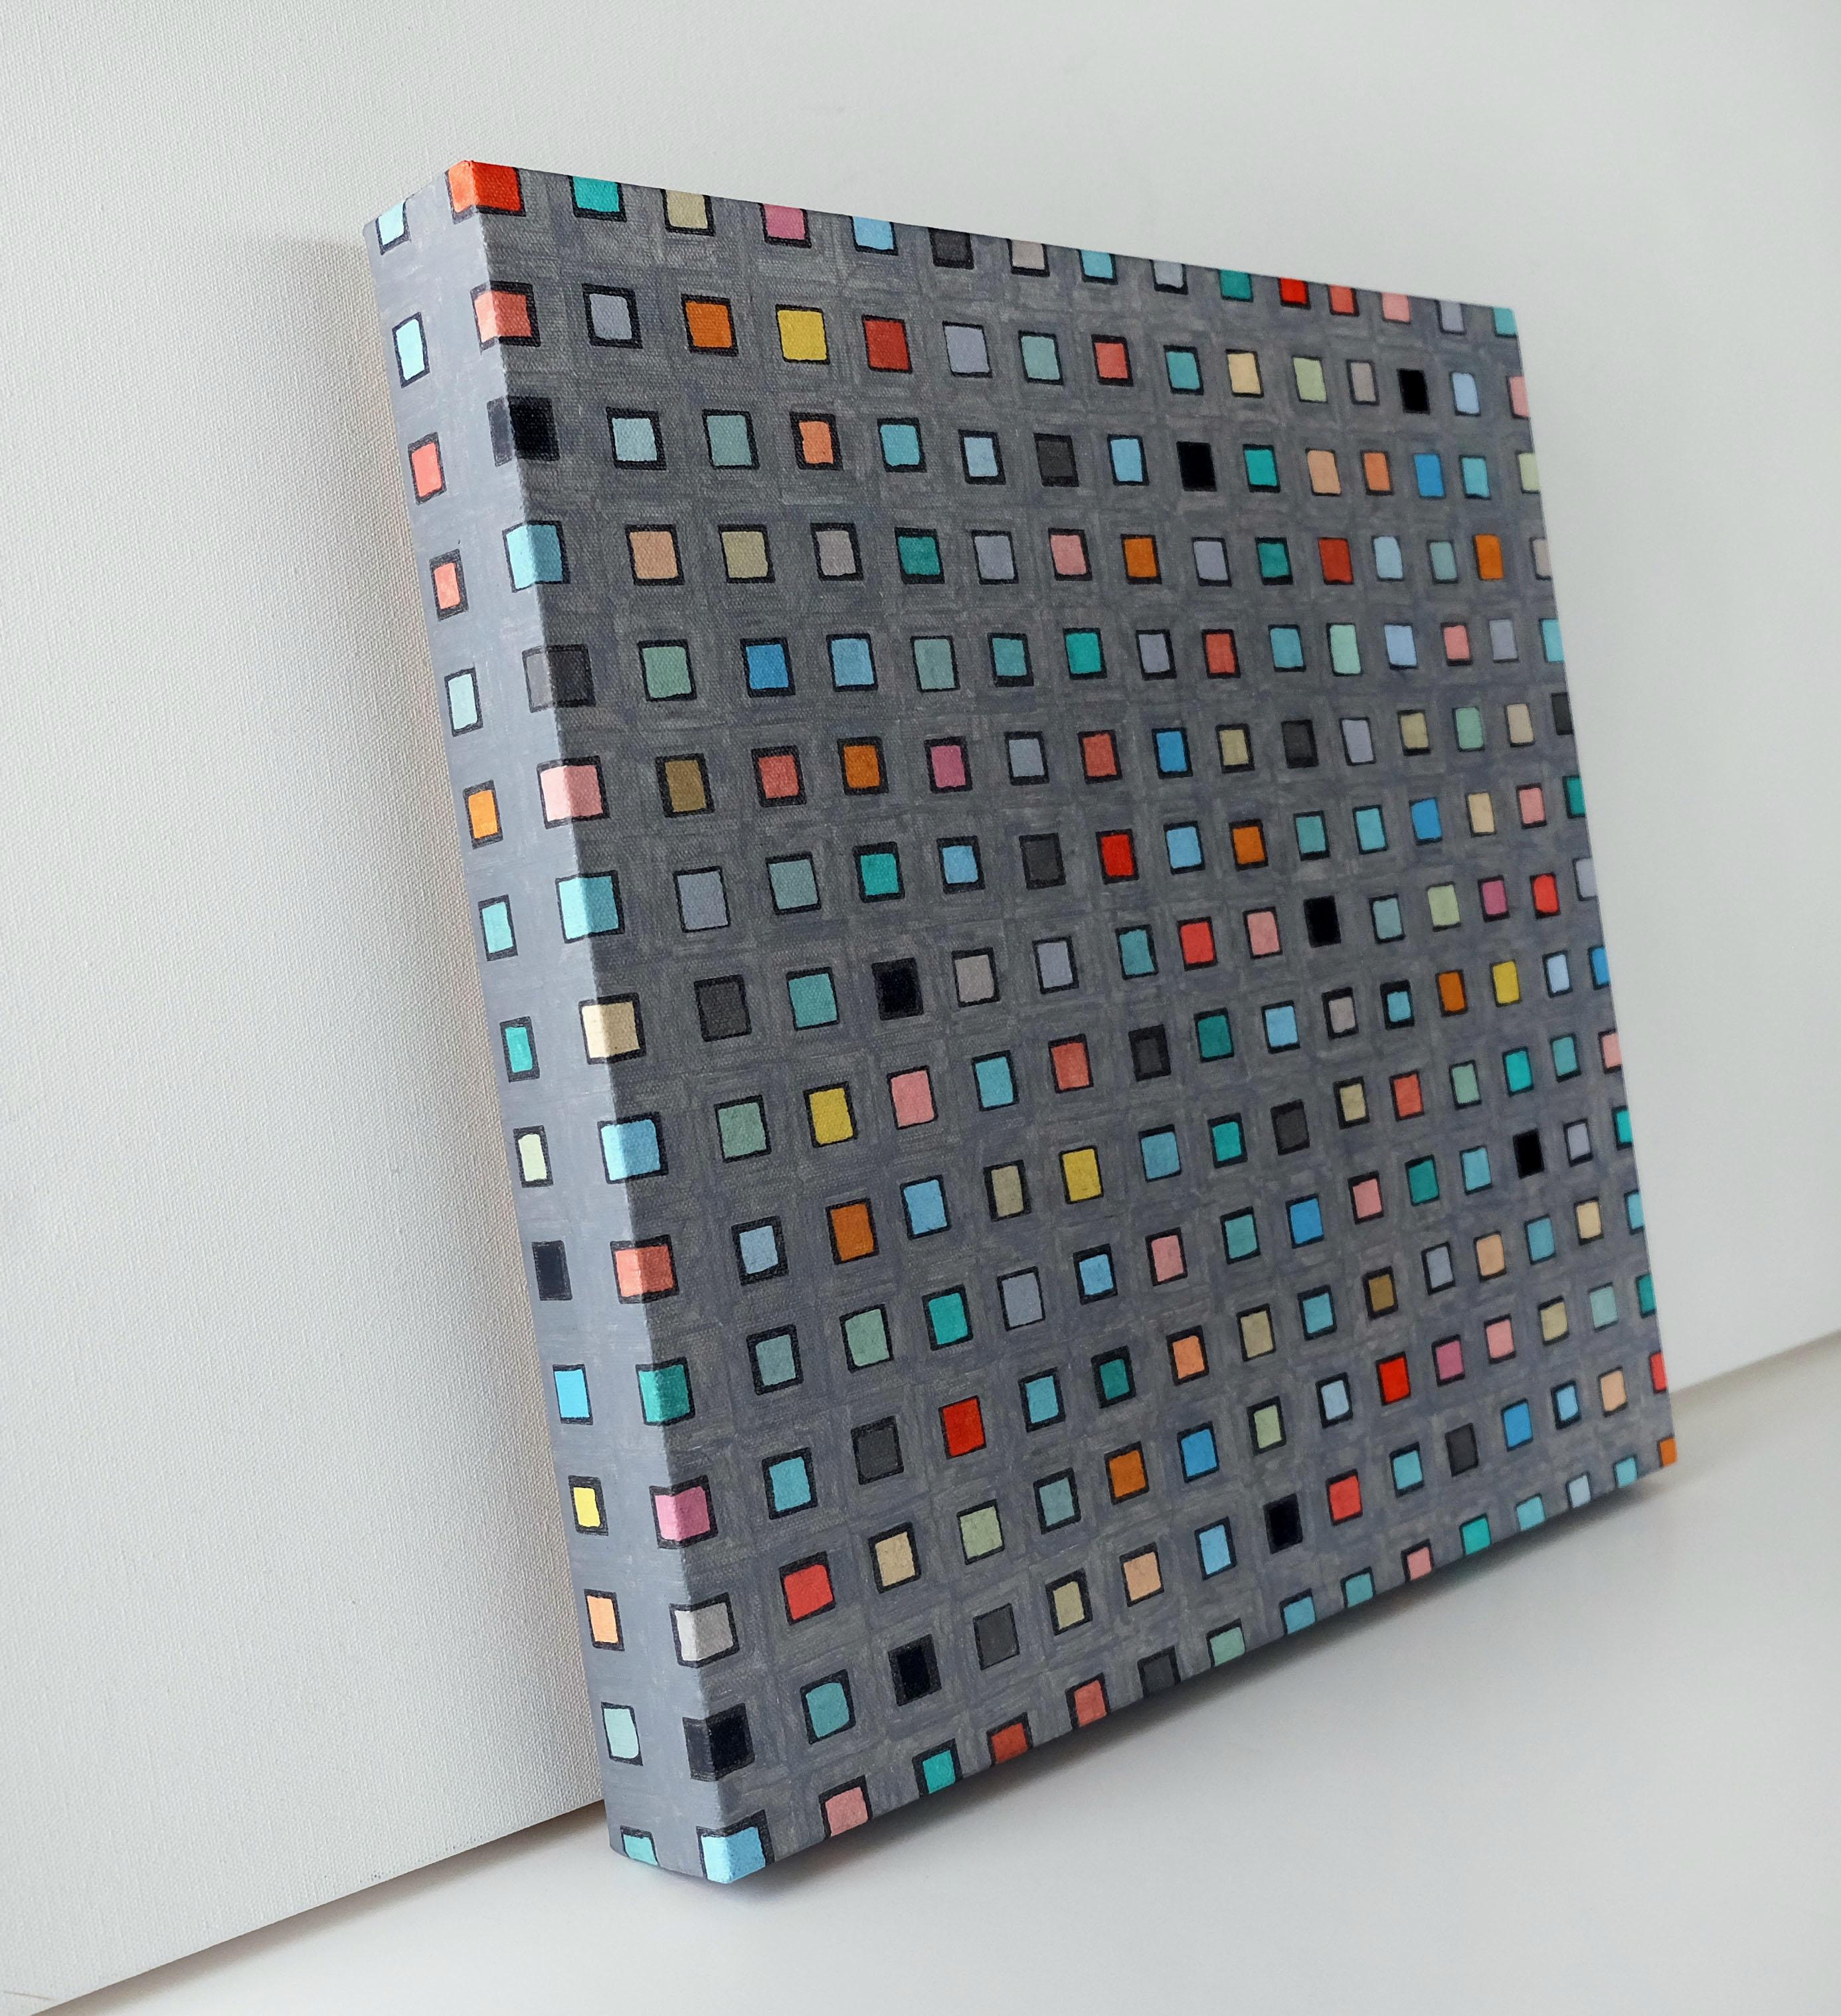 Tableaux modifiés carrés V 1.1, peinture abstraite - Abstrait Mixed Media Art par Terri Bell